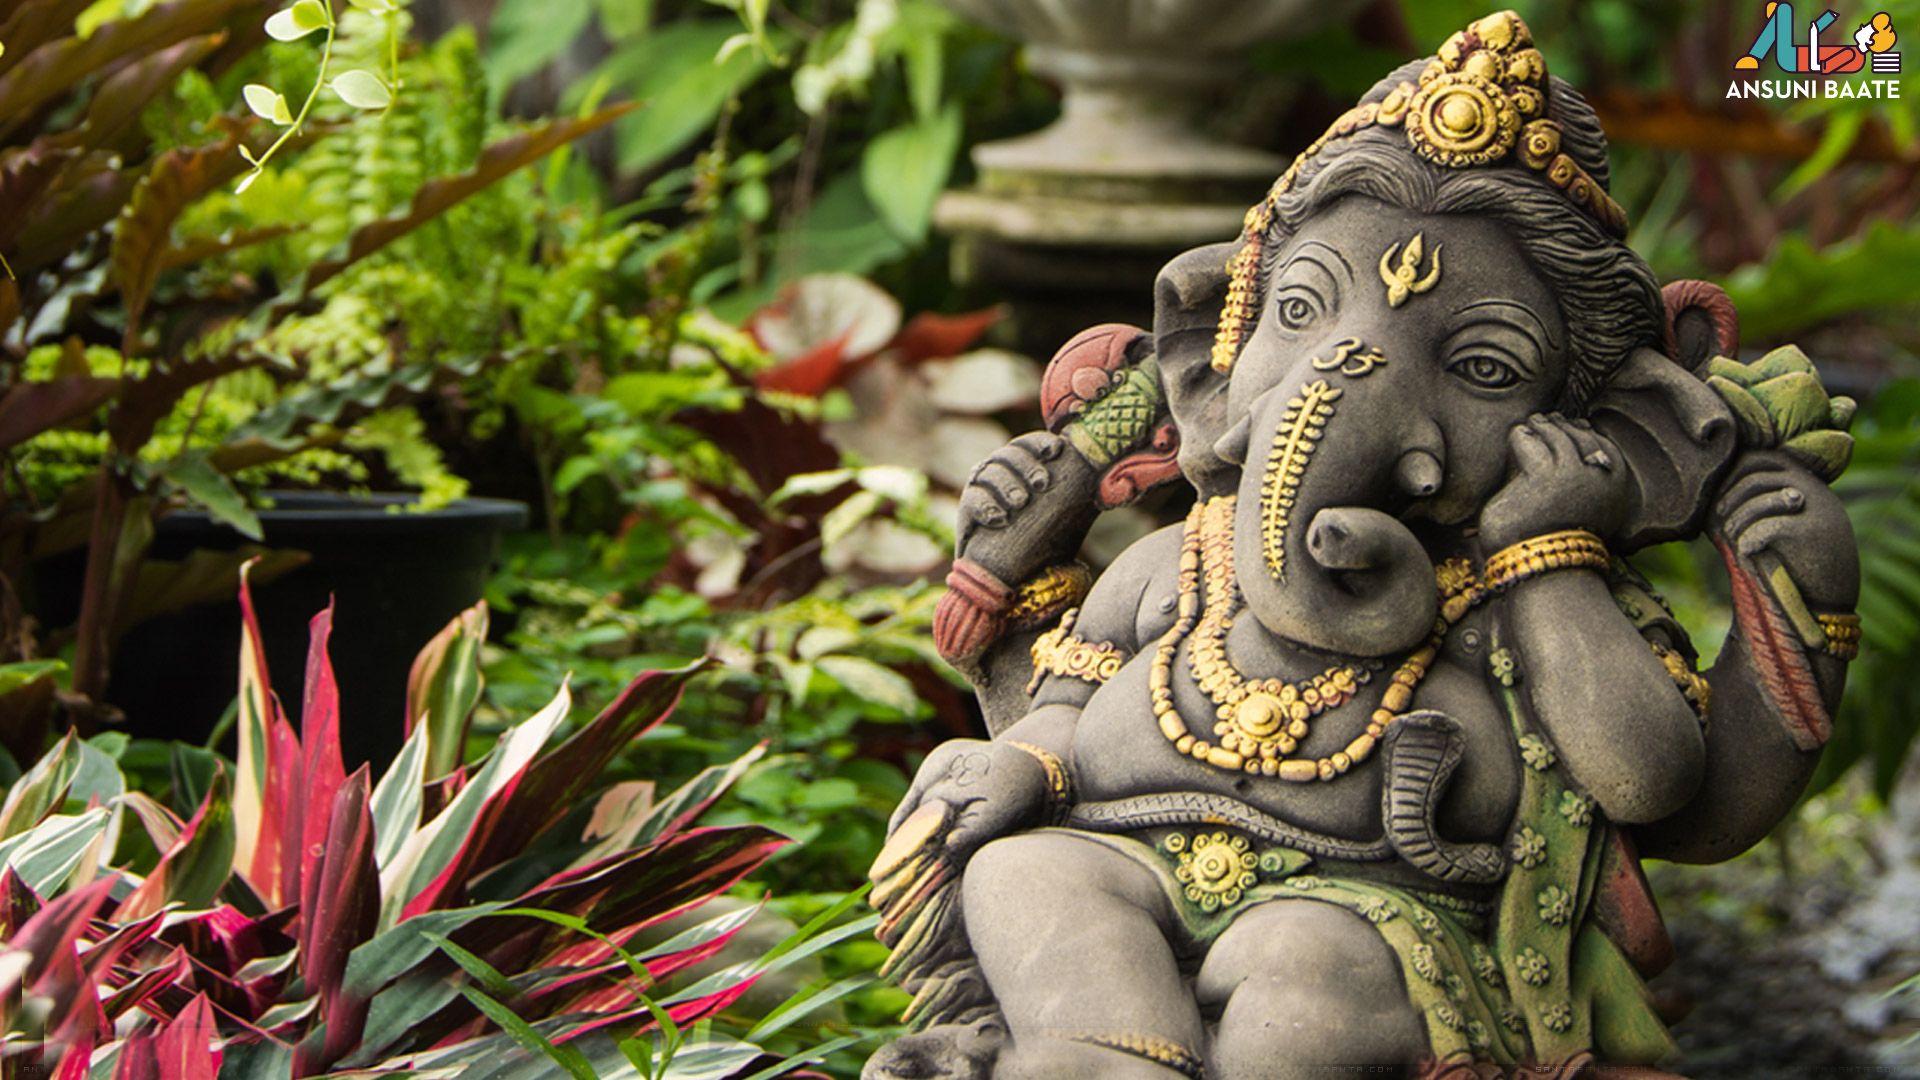 Lord Ganesha HD Wallpapers - Top Free Lord Ganesha HD Backgrounds ...